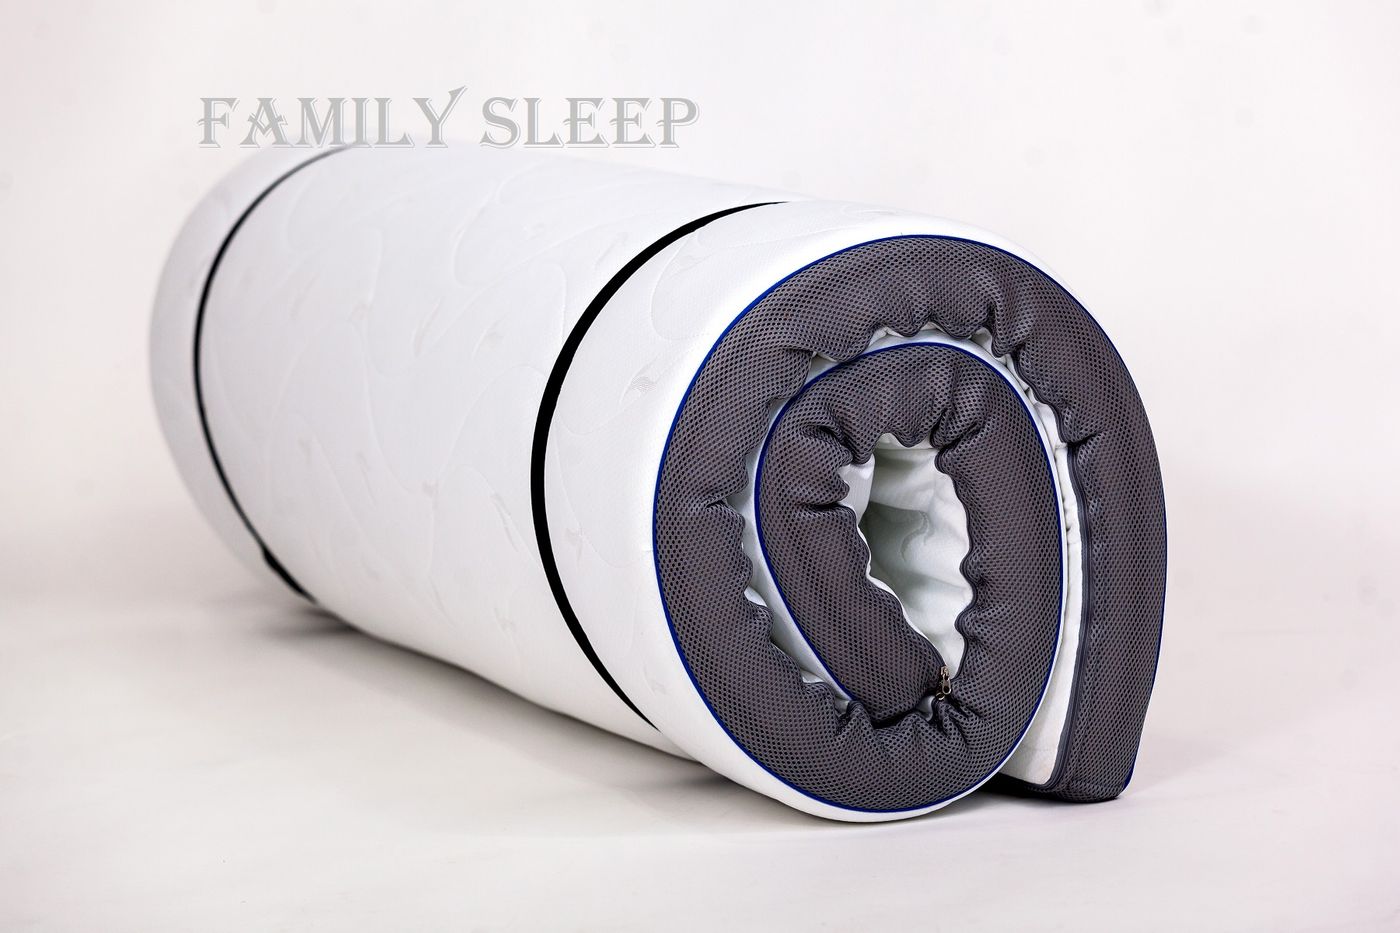 Тонкий матрац-топпер Family Sleep TOP Air Foam